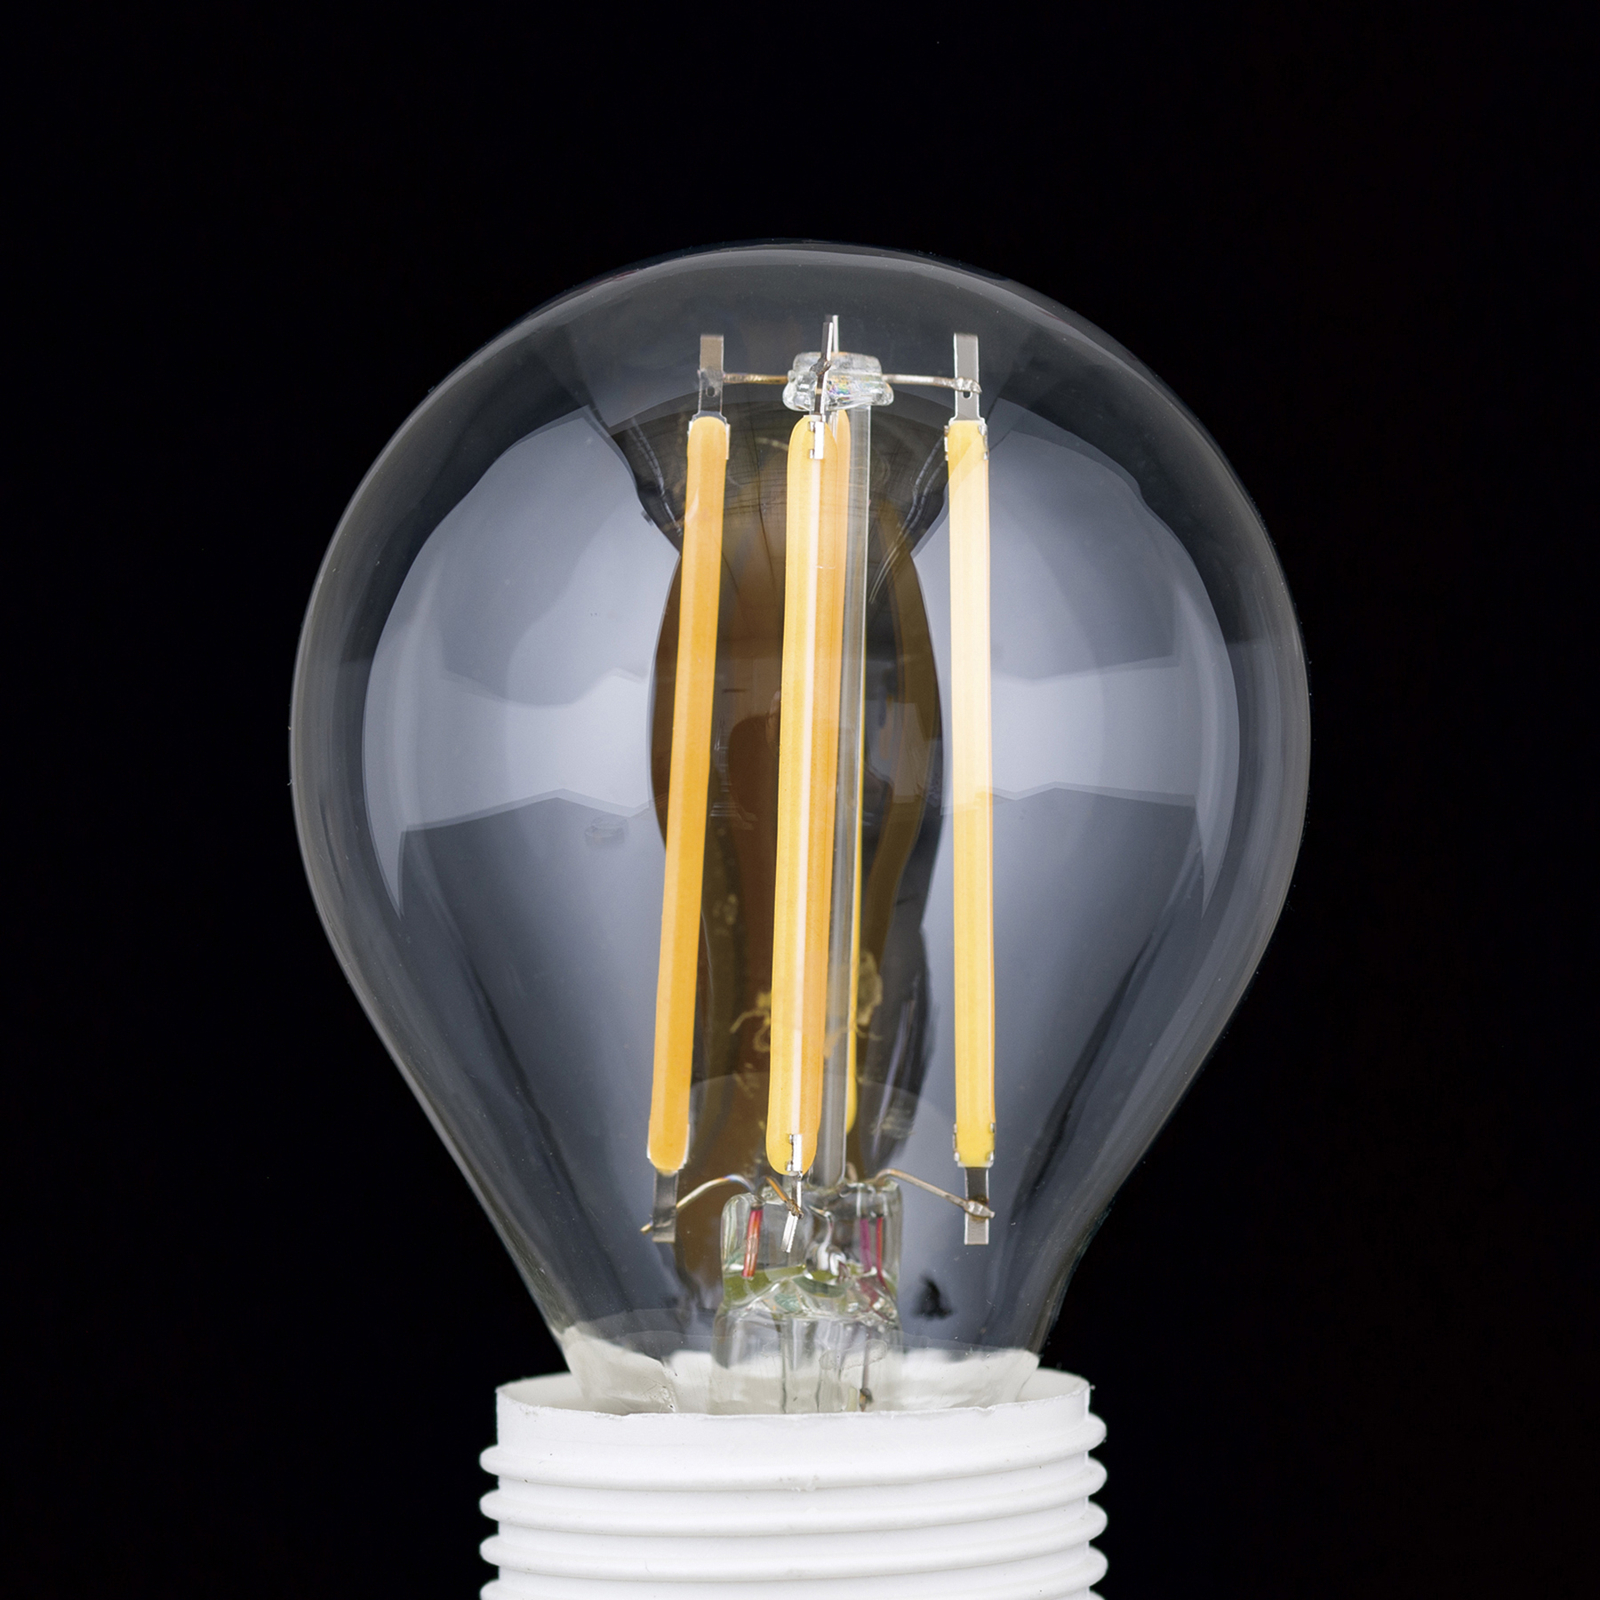 LED-Tropfenlampe E14 5W Filament 827 dimmbar